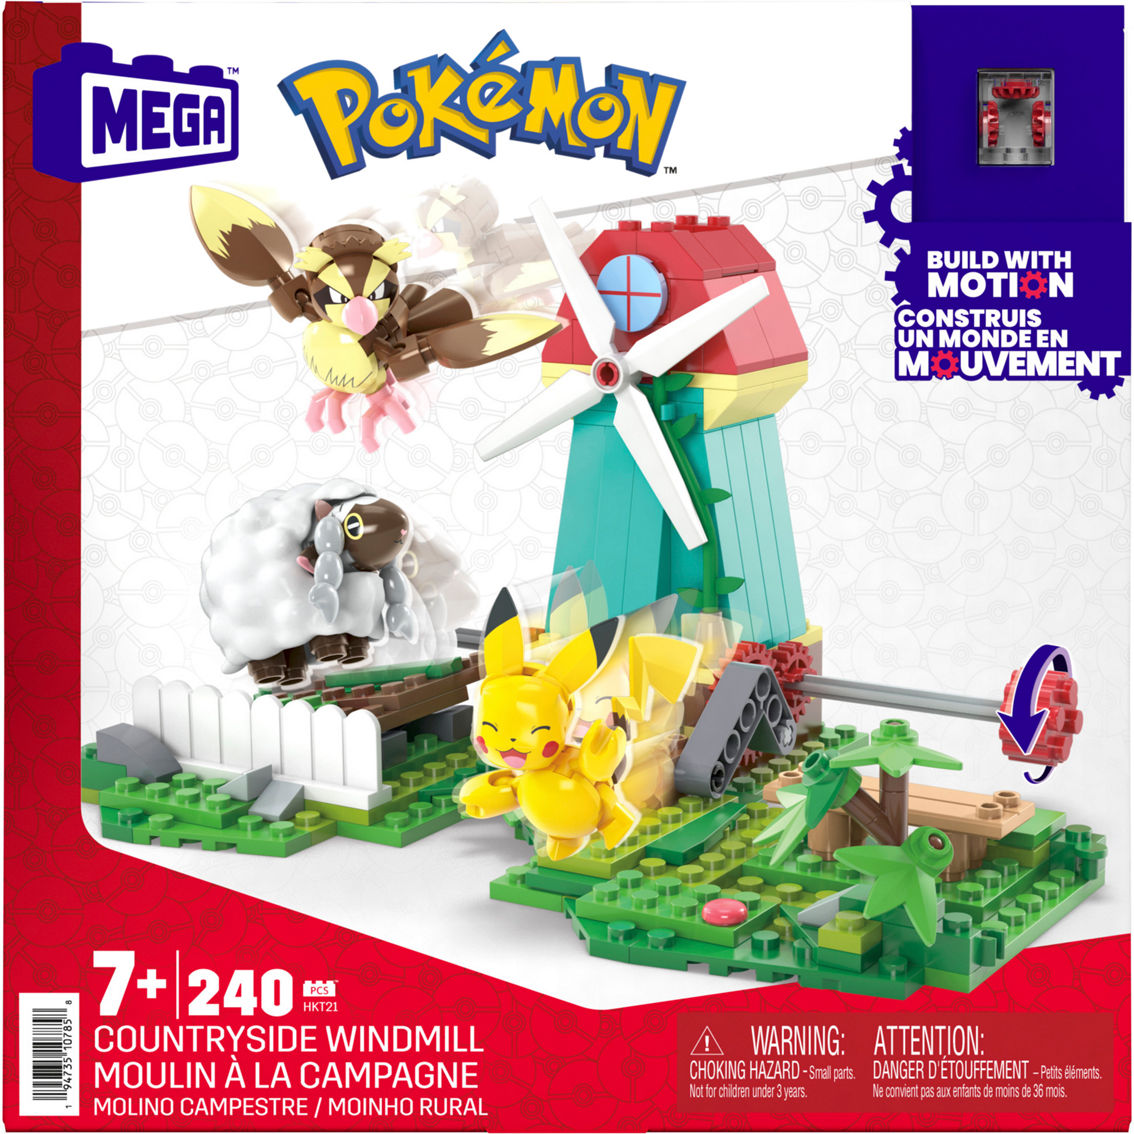 MEGA Pokémon Motion Pikachu Building Set - Zinc Mecha